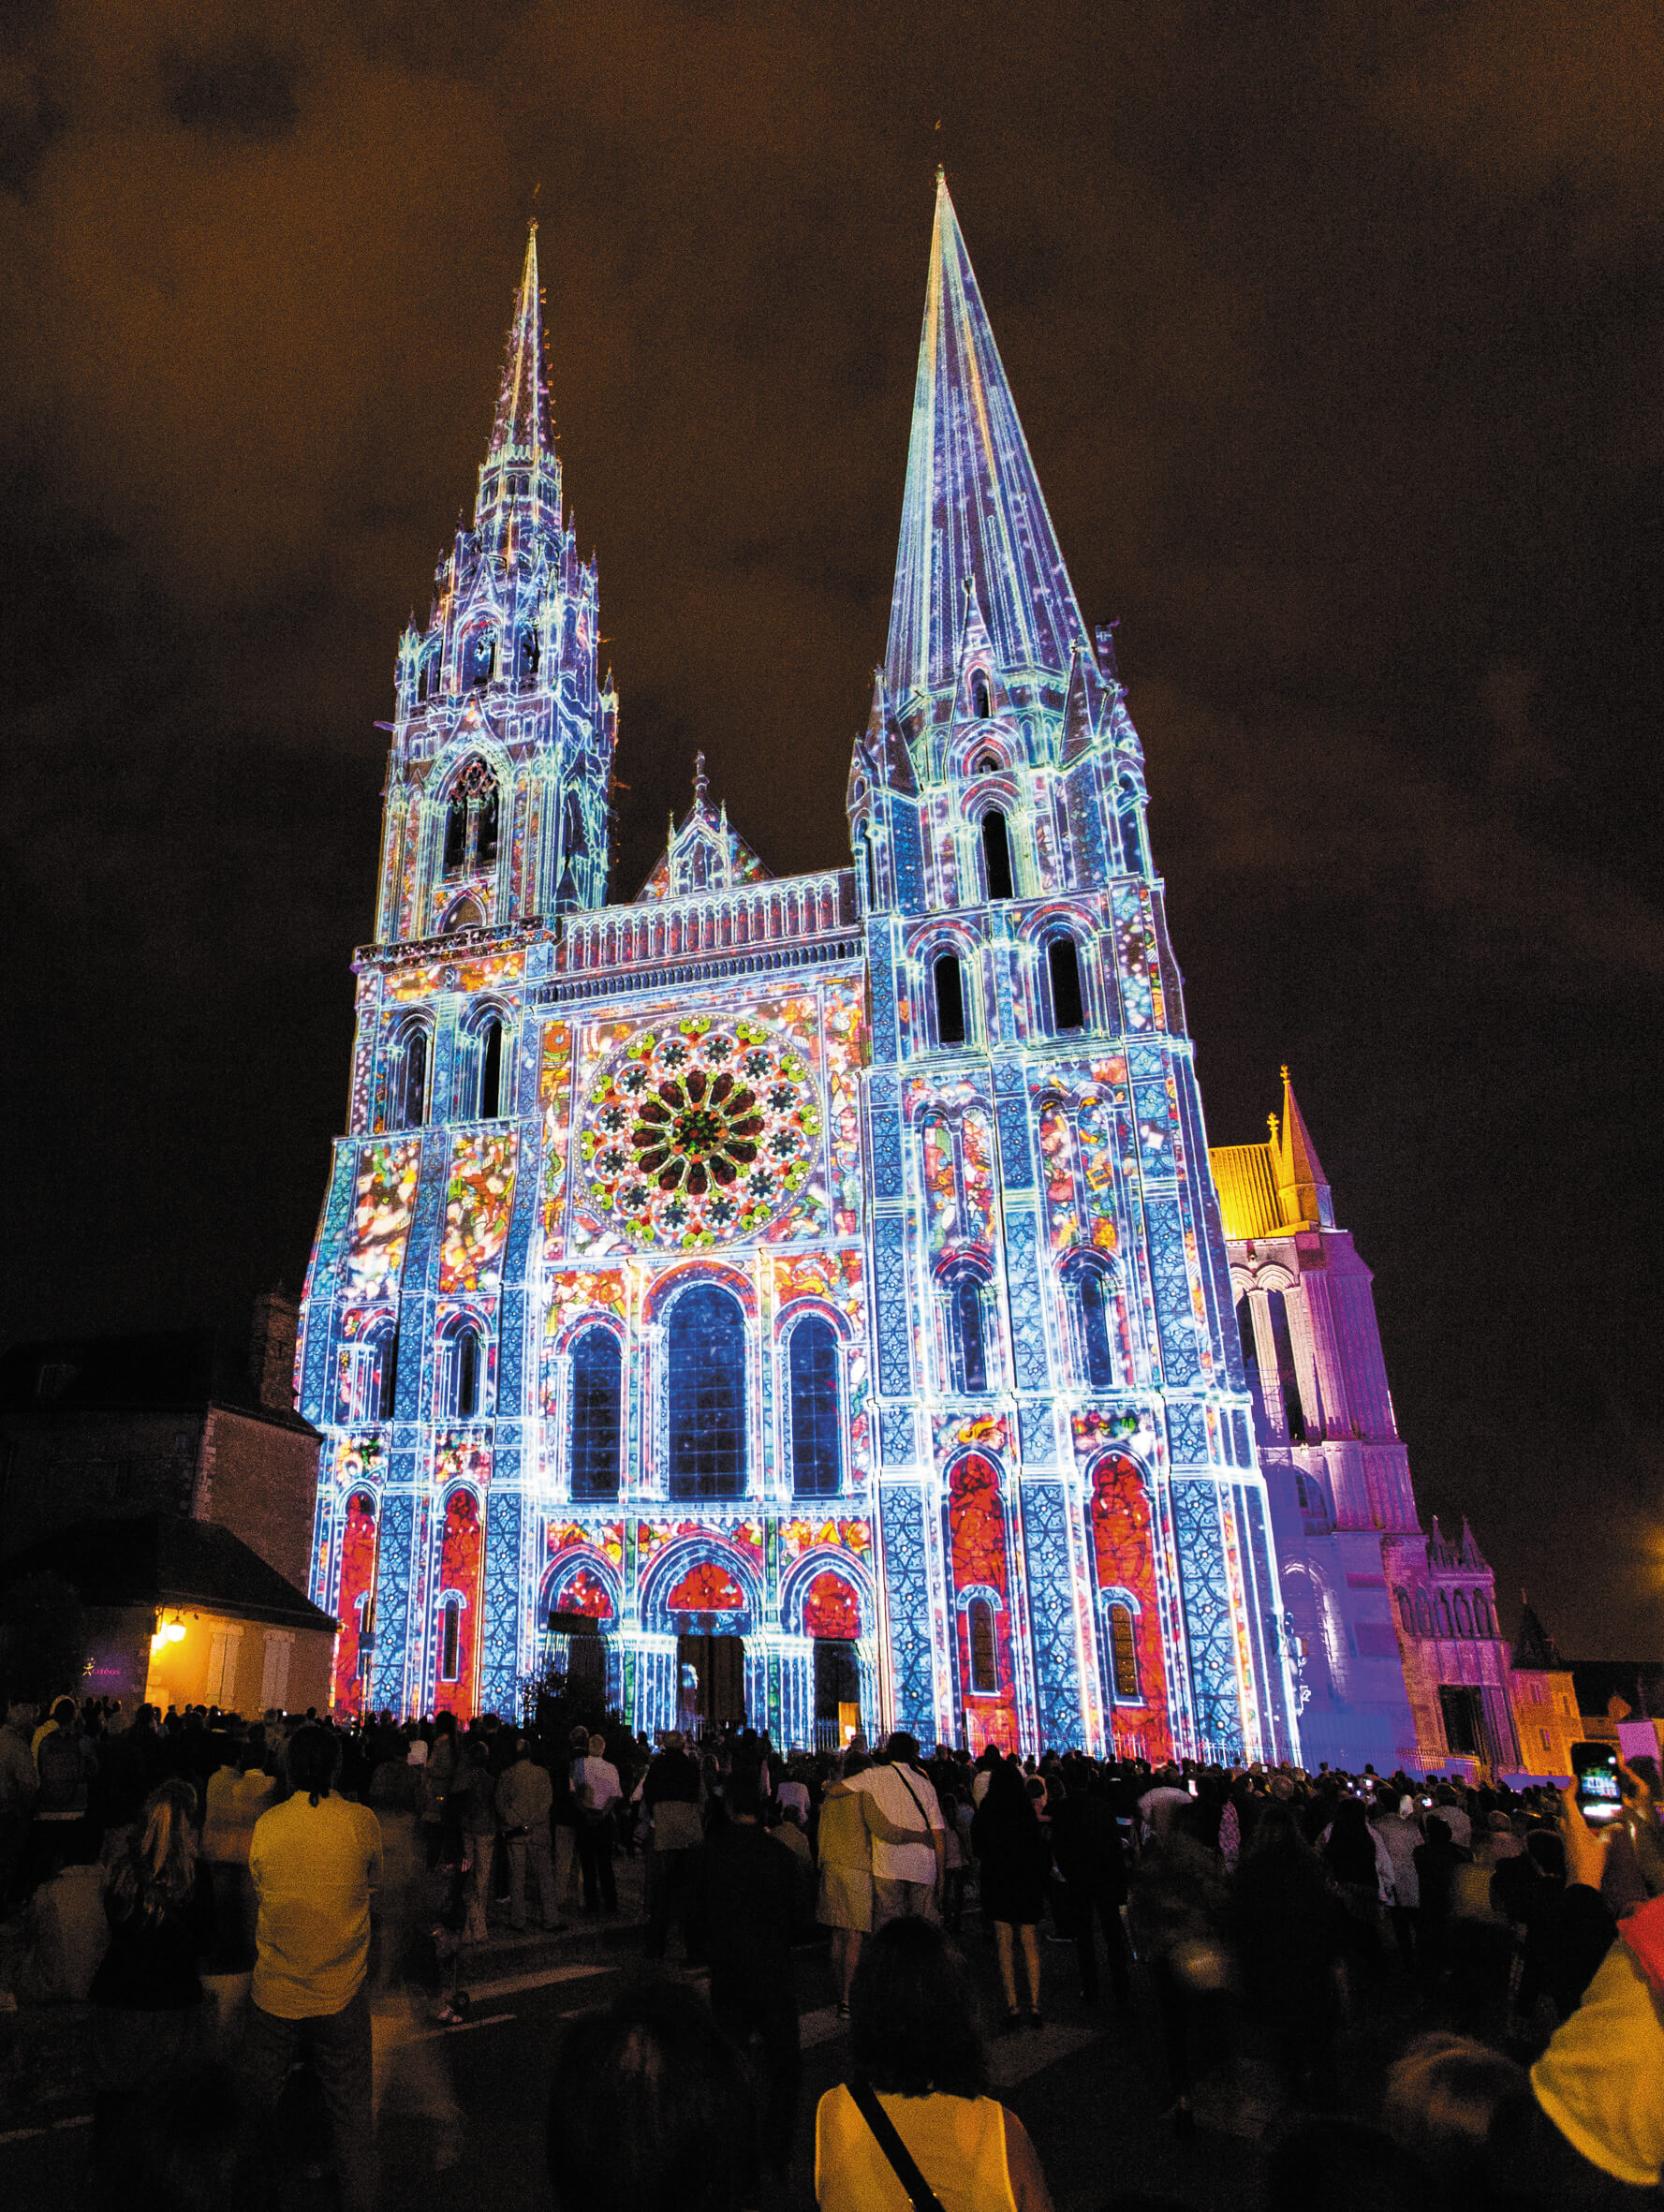 Chartres en Lumières